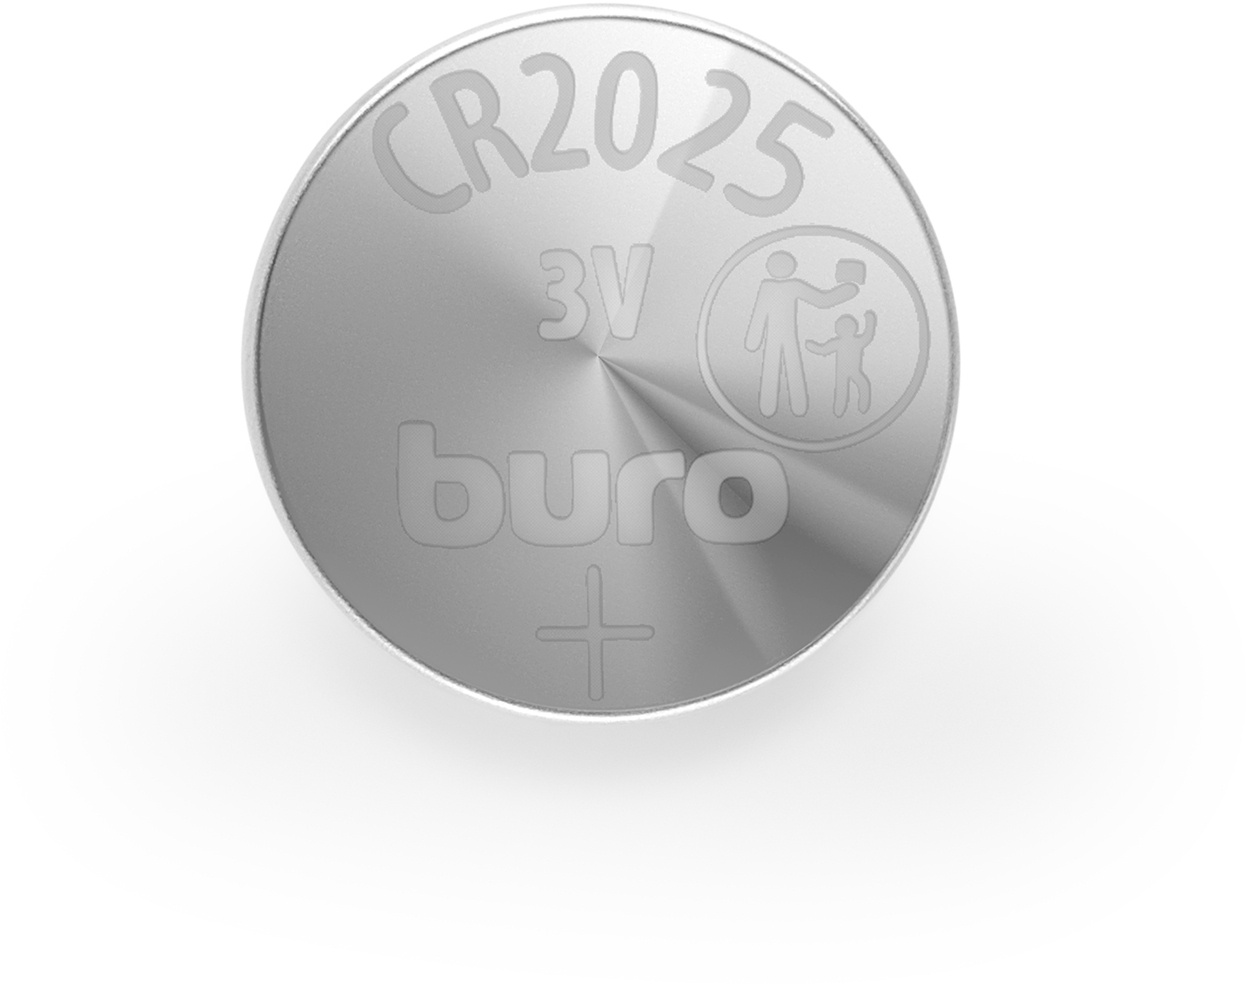 Батарея Buro CR2025, 3V, 1 шт